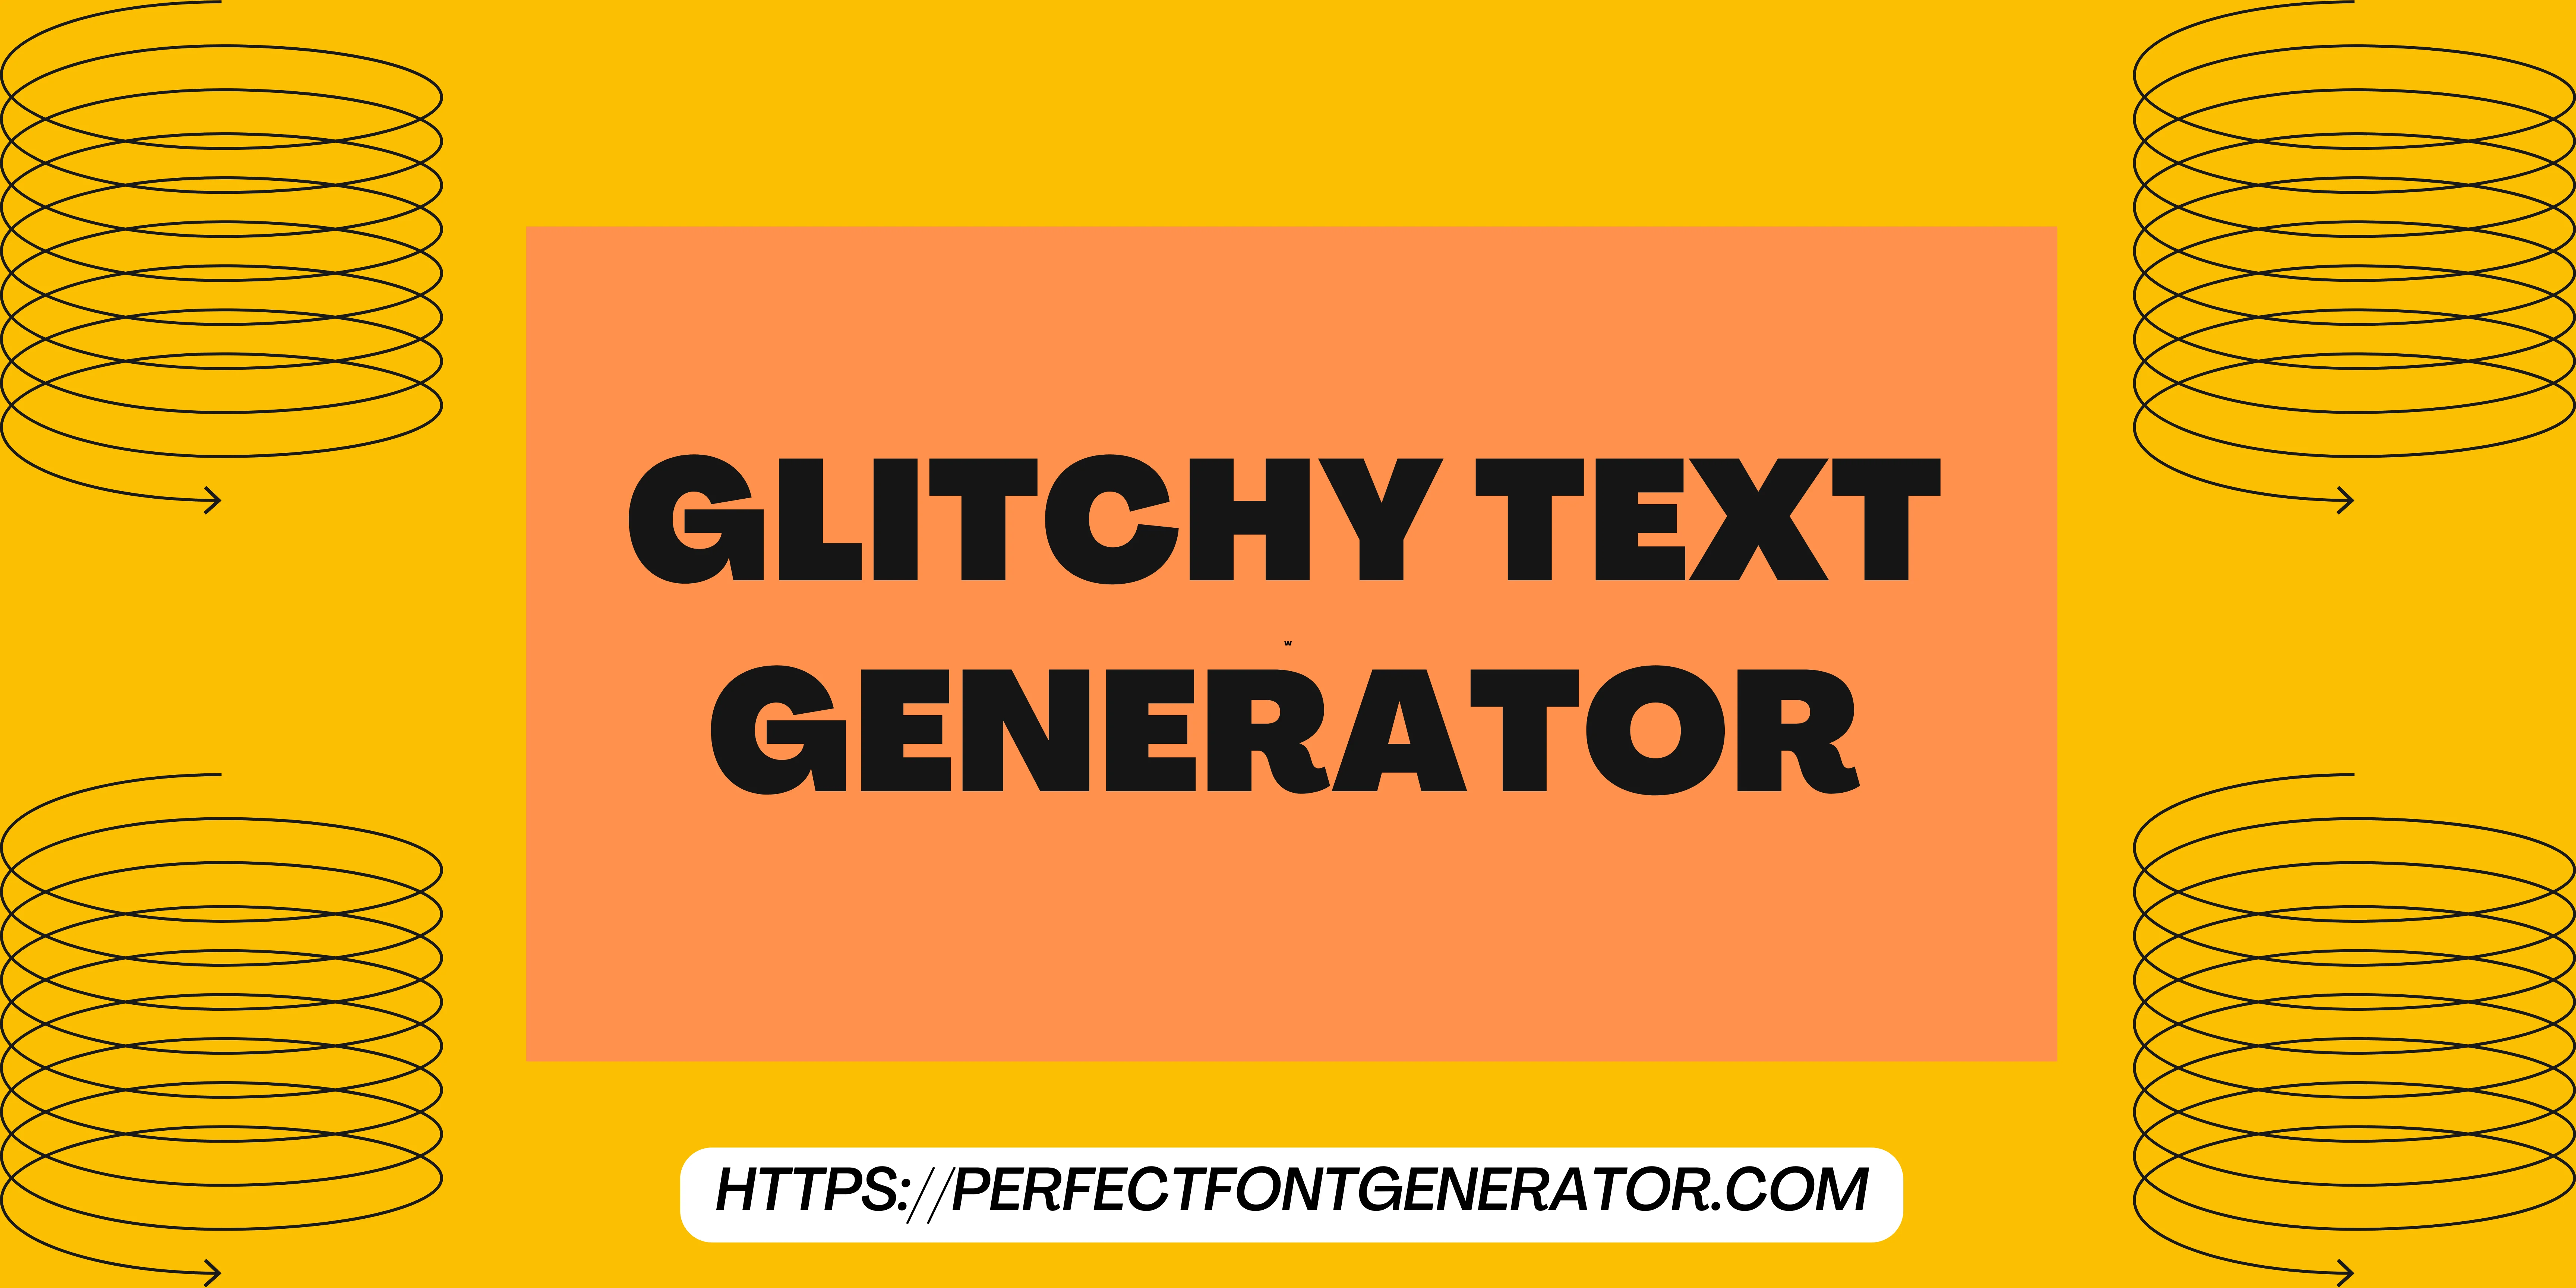 glitchy text generator